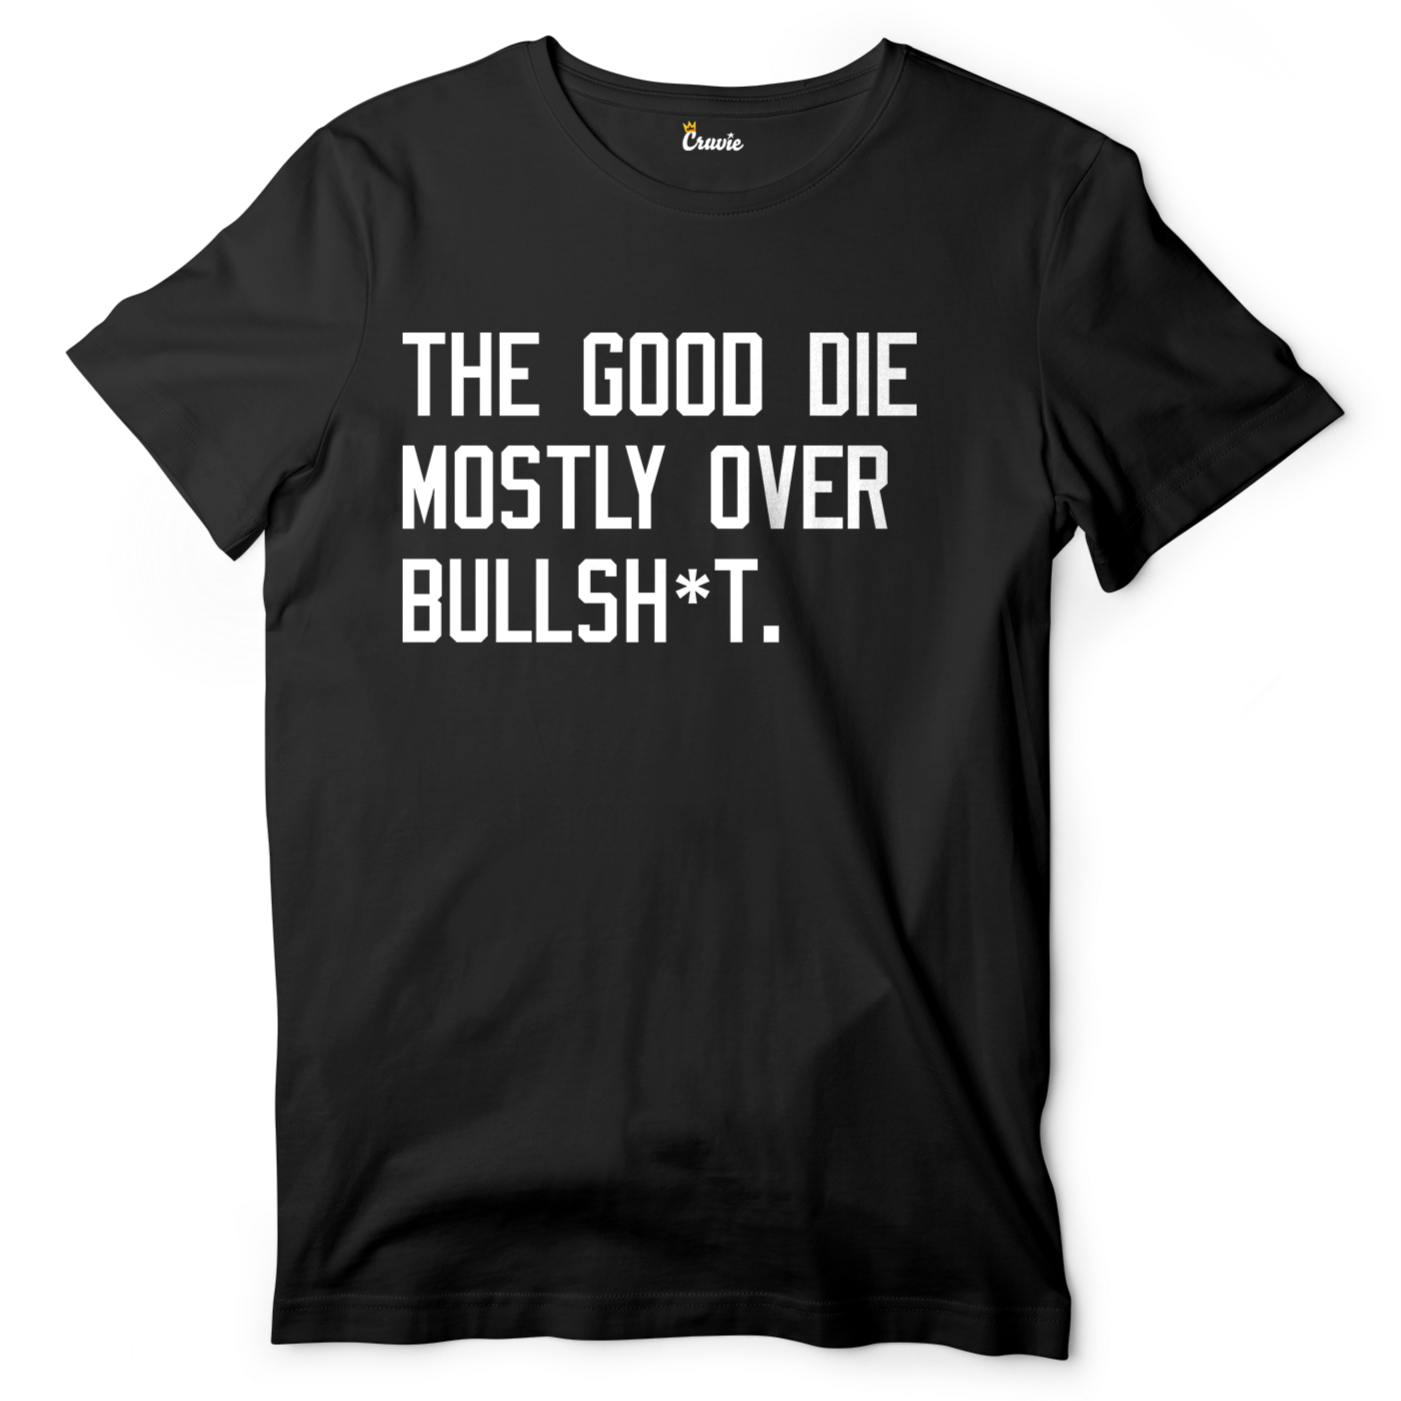 The Good Die Mostly Over Bullsh*t | Cruvie